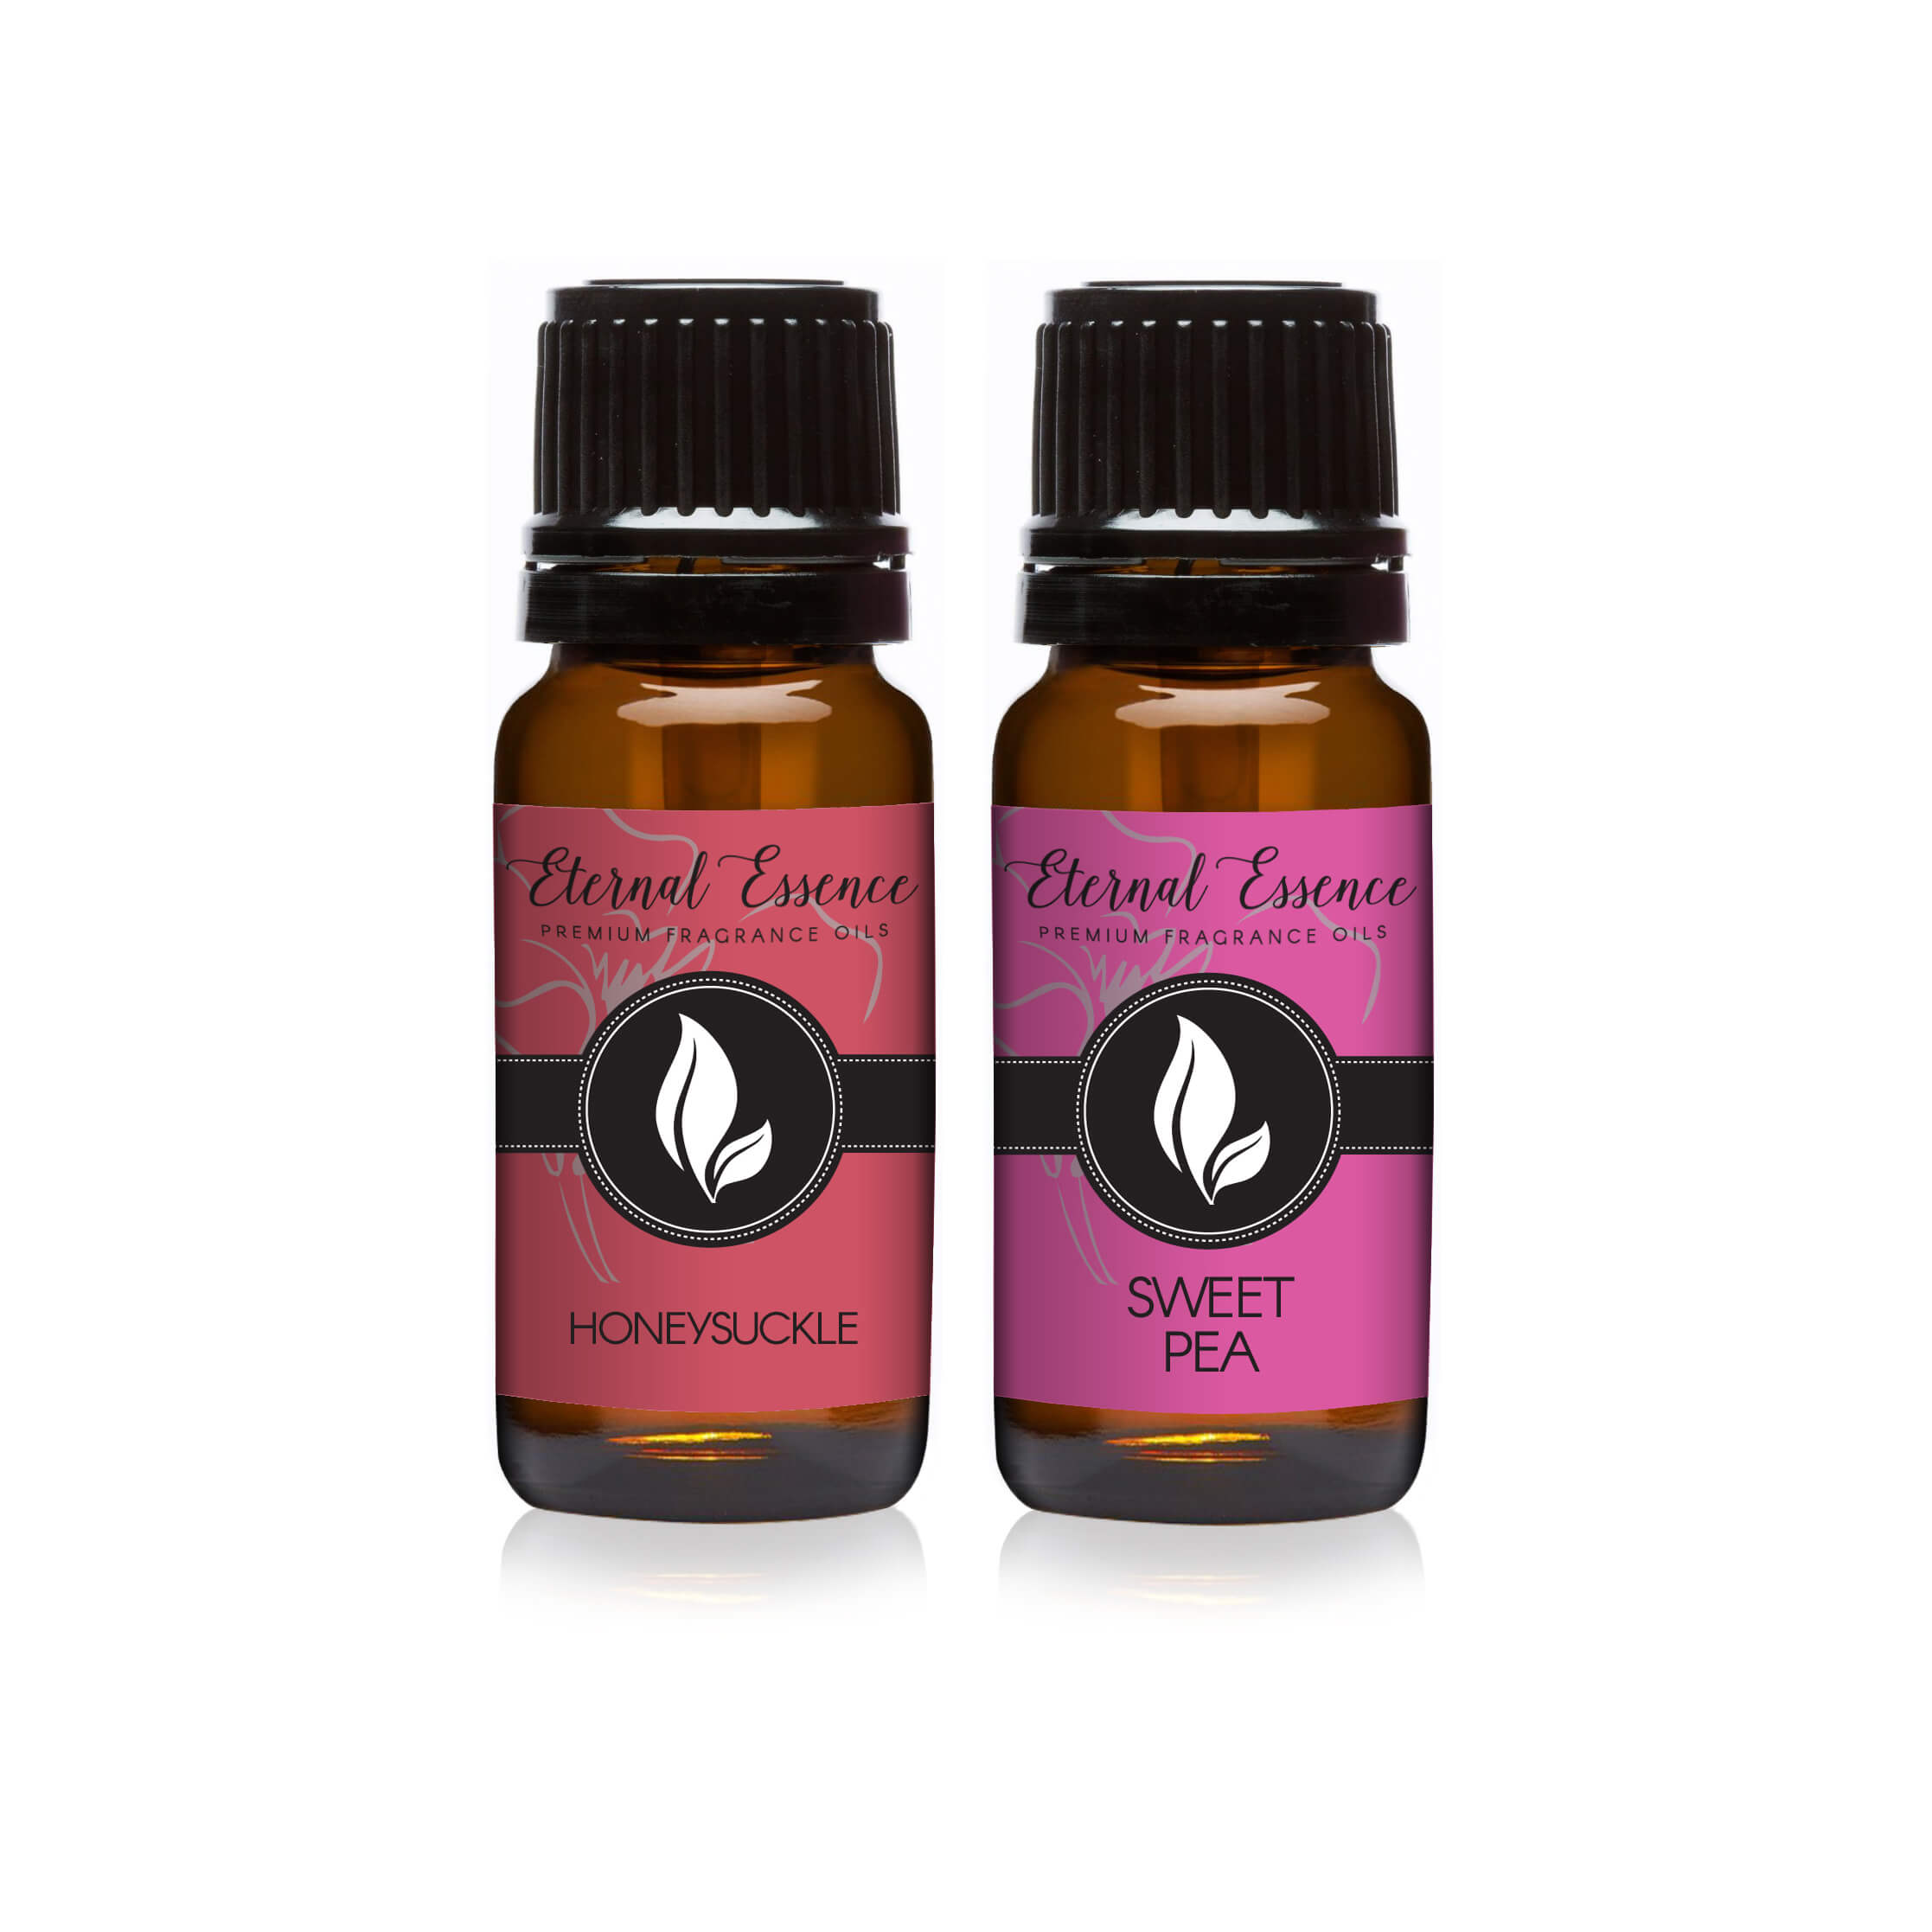 Pair (2) - Honeysuckle & Sweet Pea - Premium Fragrance Oil Pair